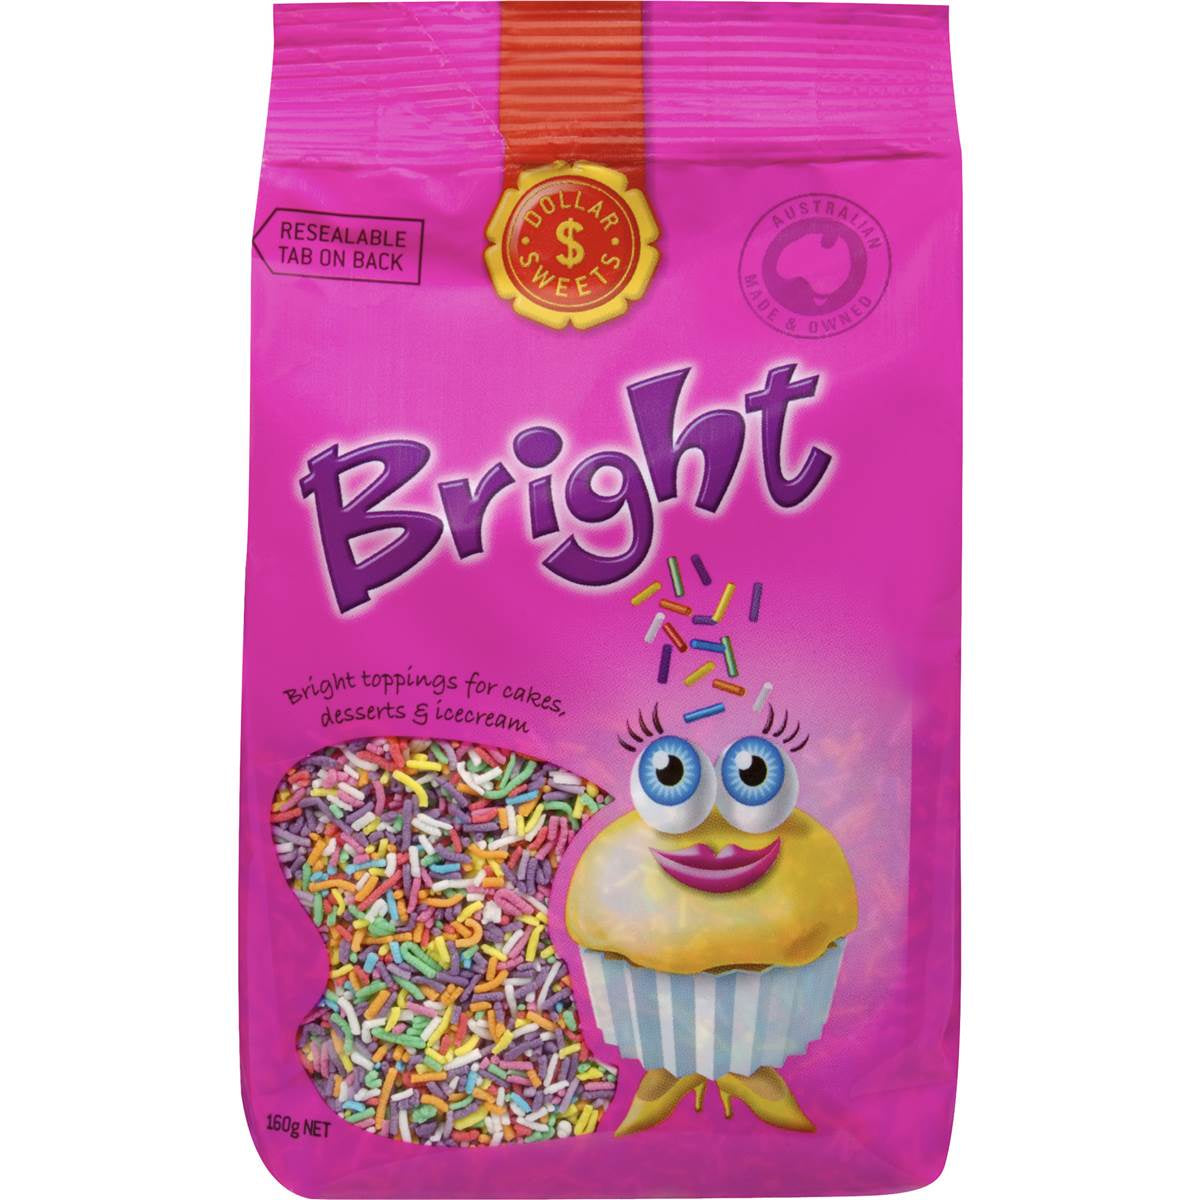 Dollar Sweets Bright Sprinkles 160g